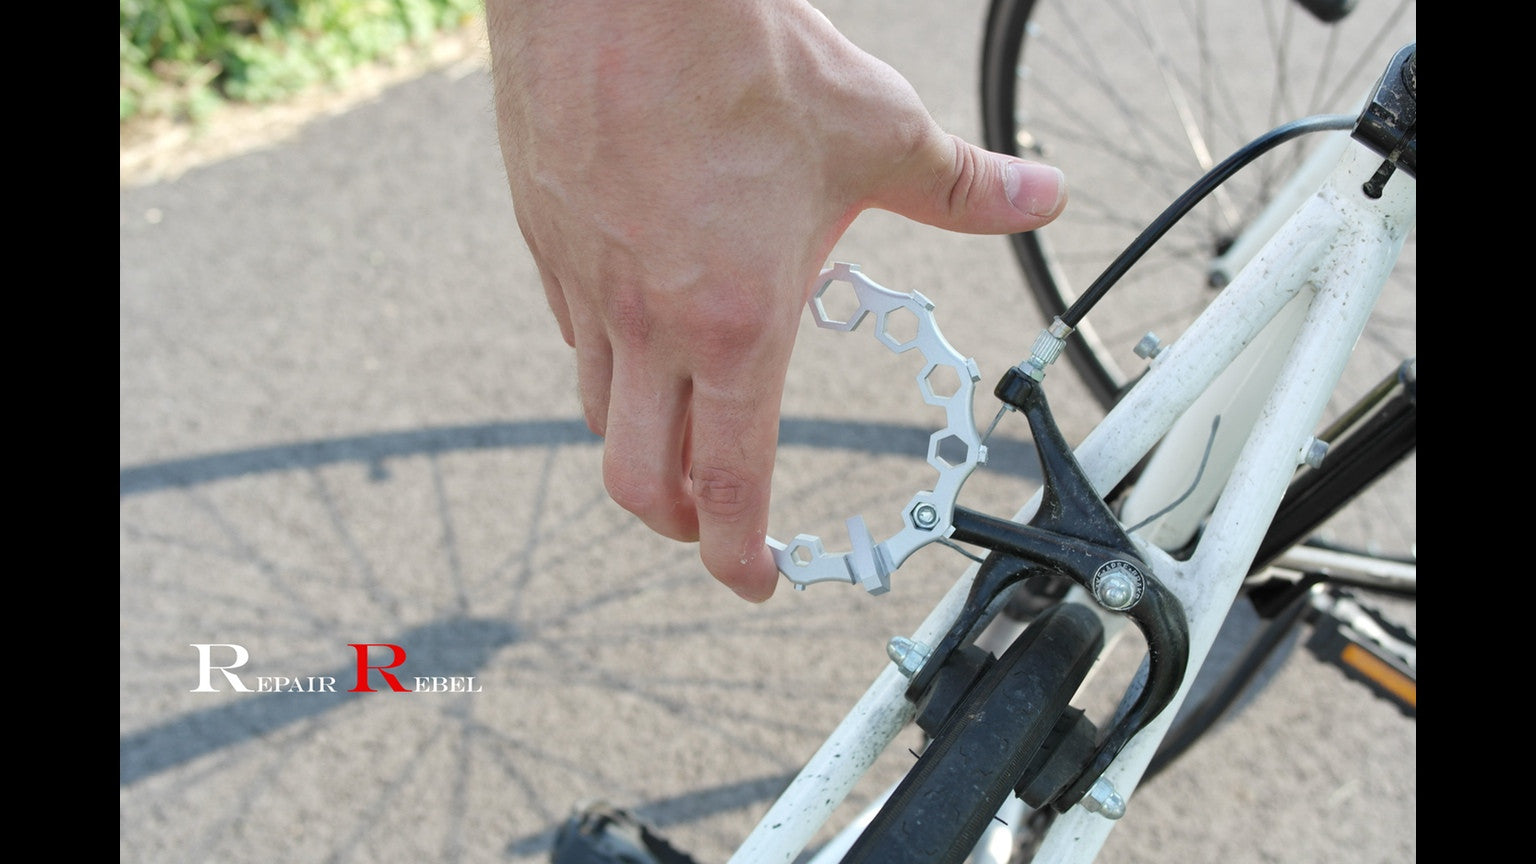 The Repair Rebel Multi-tool - The Cyclists Third Wheel!